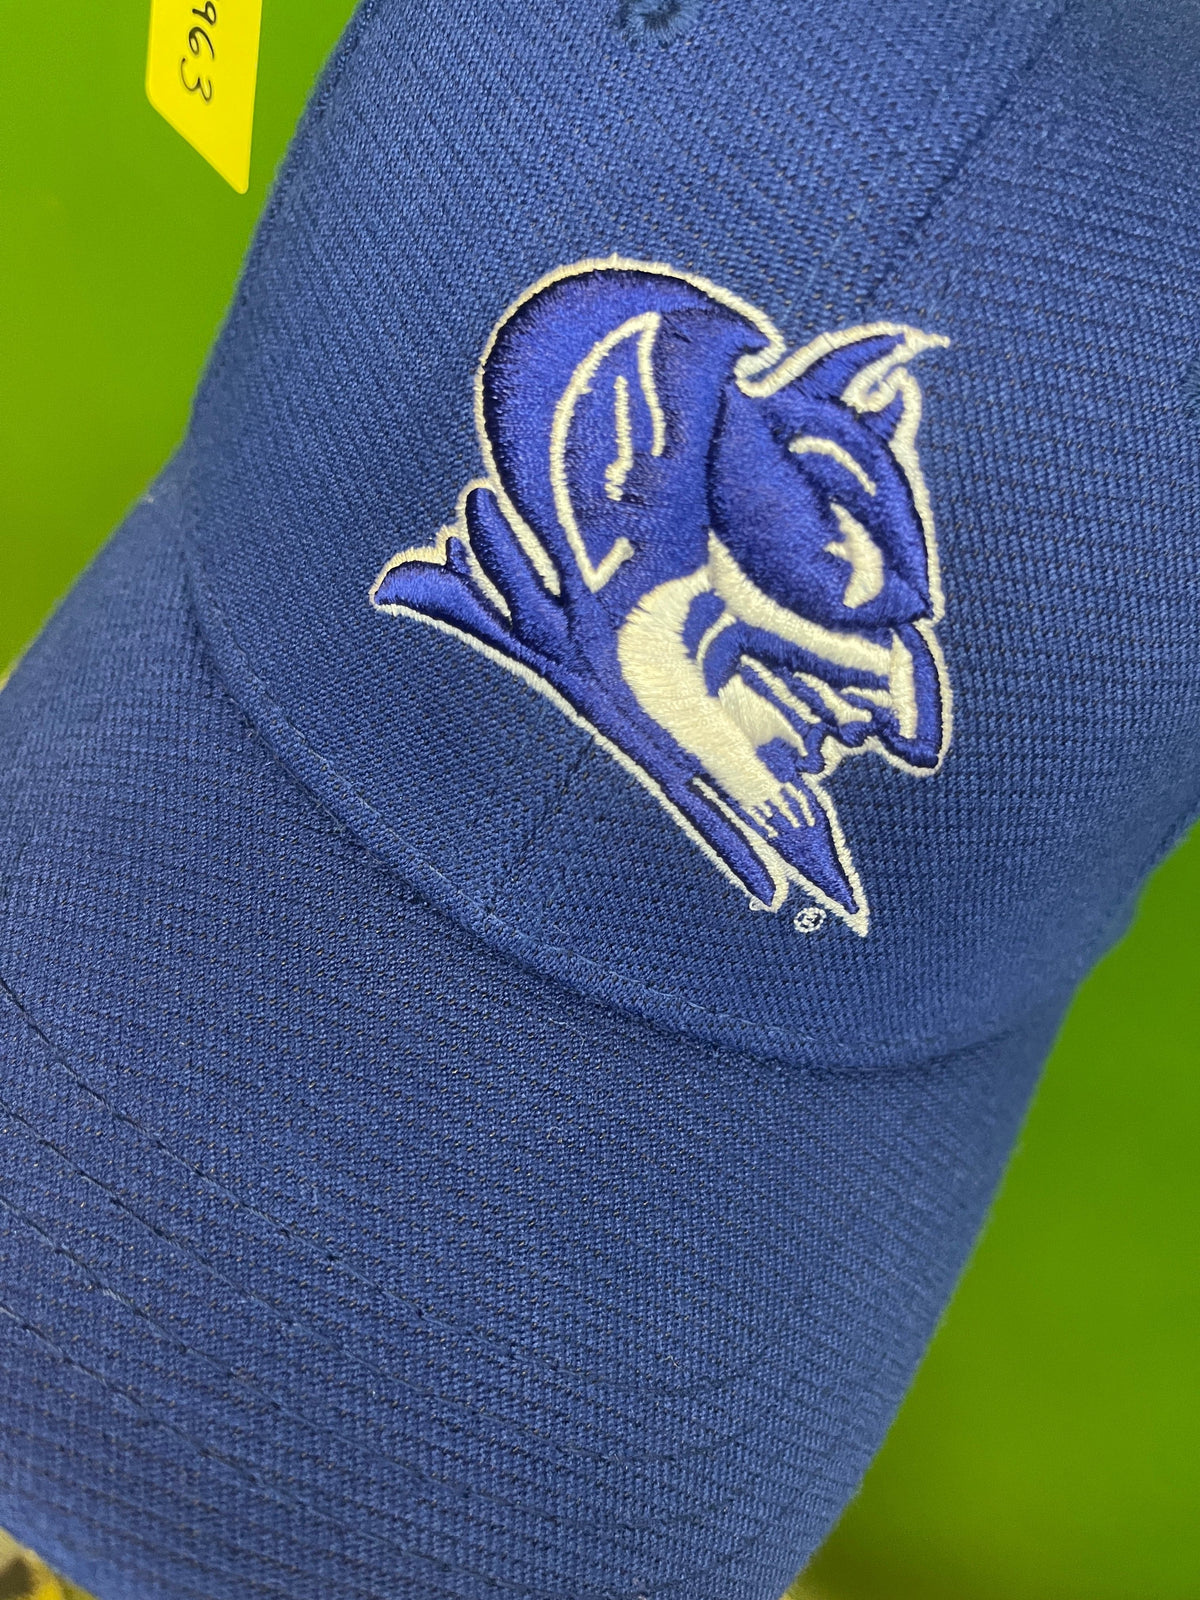 NCAA Duke Blue Devils Zephyr Hat/Cap Youth OSFM